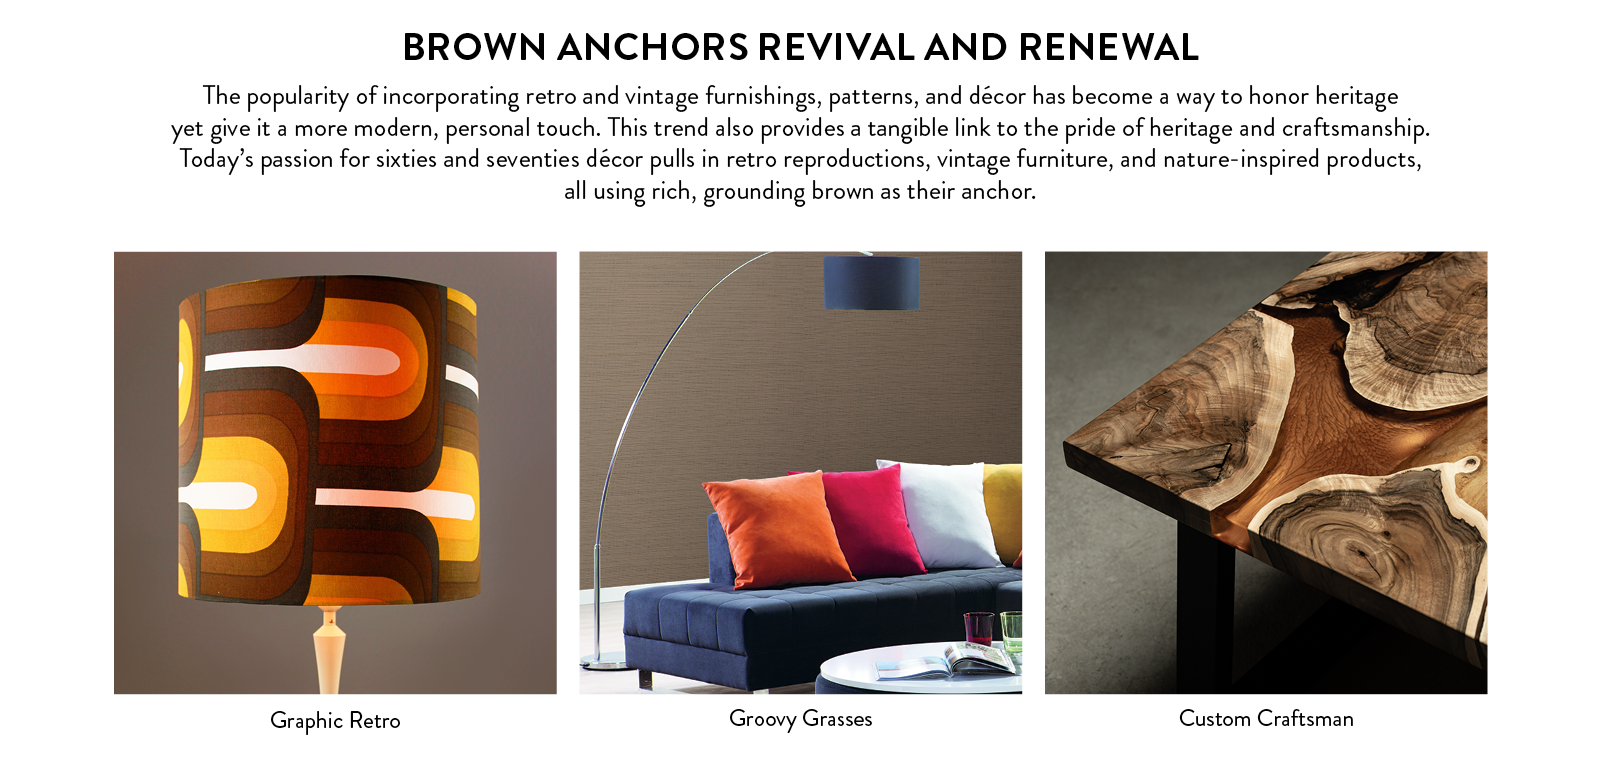 Brown anchors revival and renewal